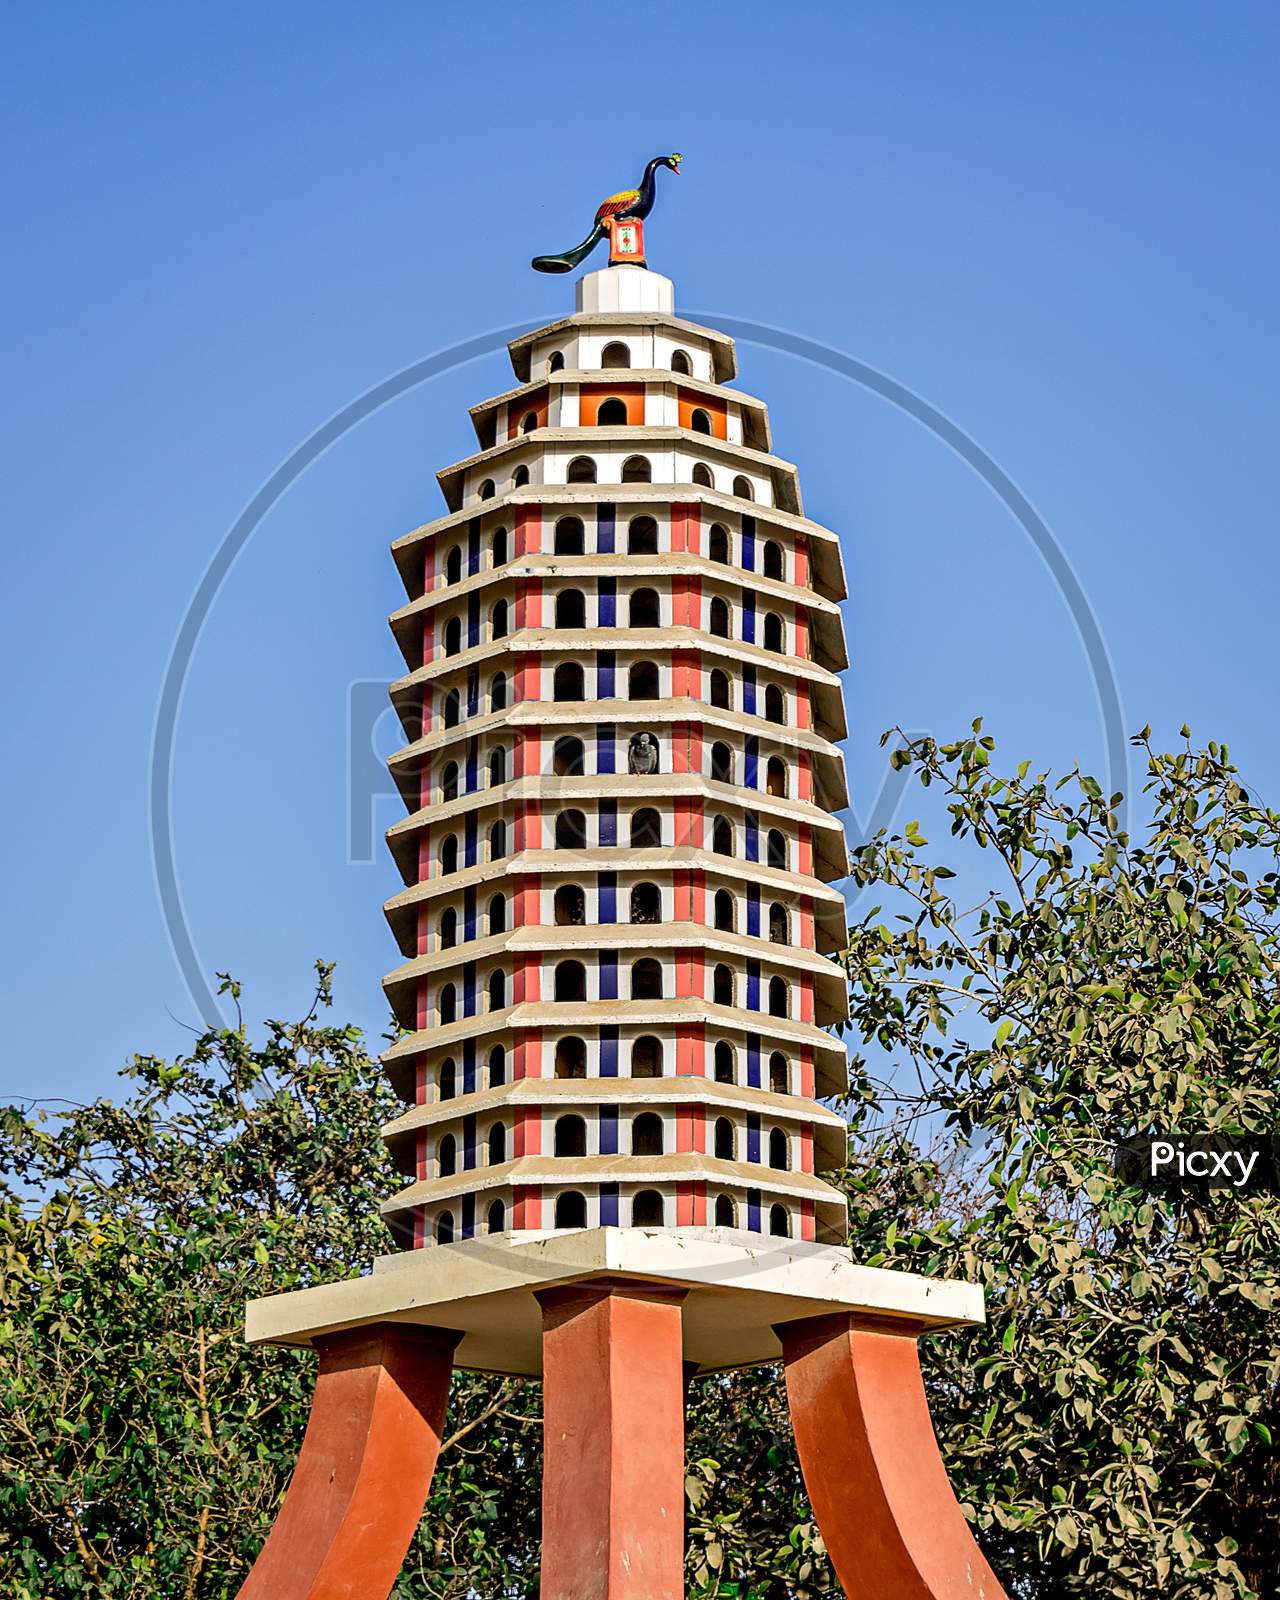 Huge Permanent Cement Pigeon Nest Or Shelter At Nageshwar Temple